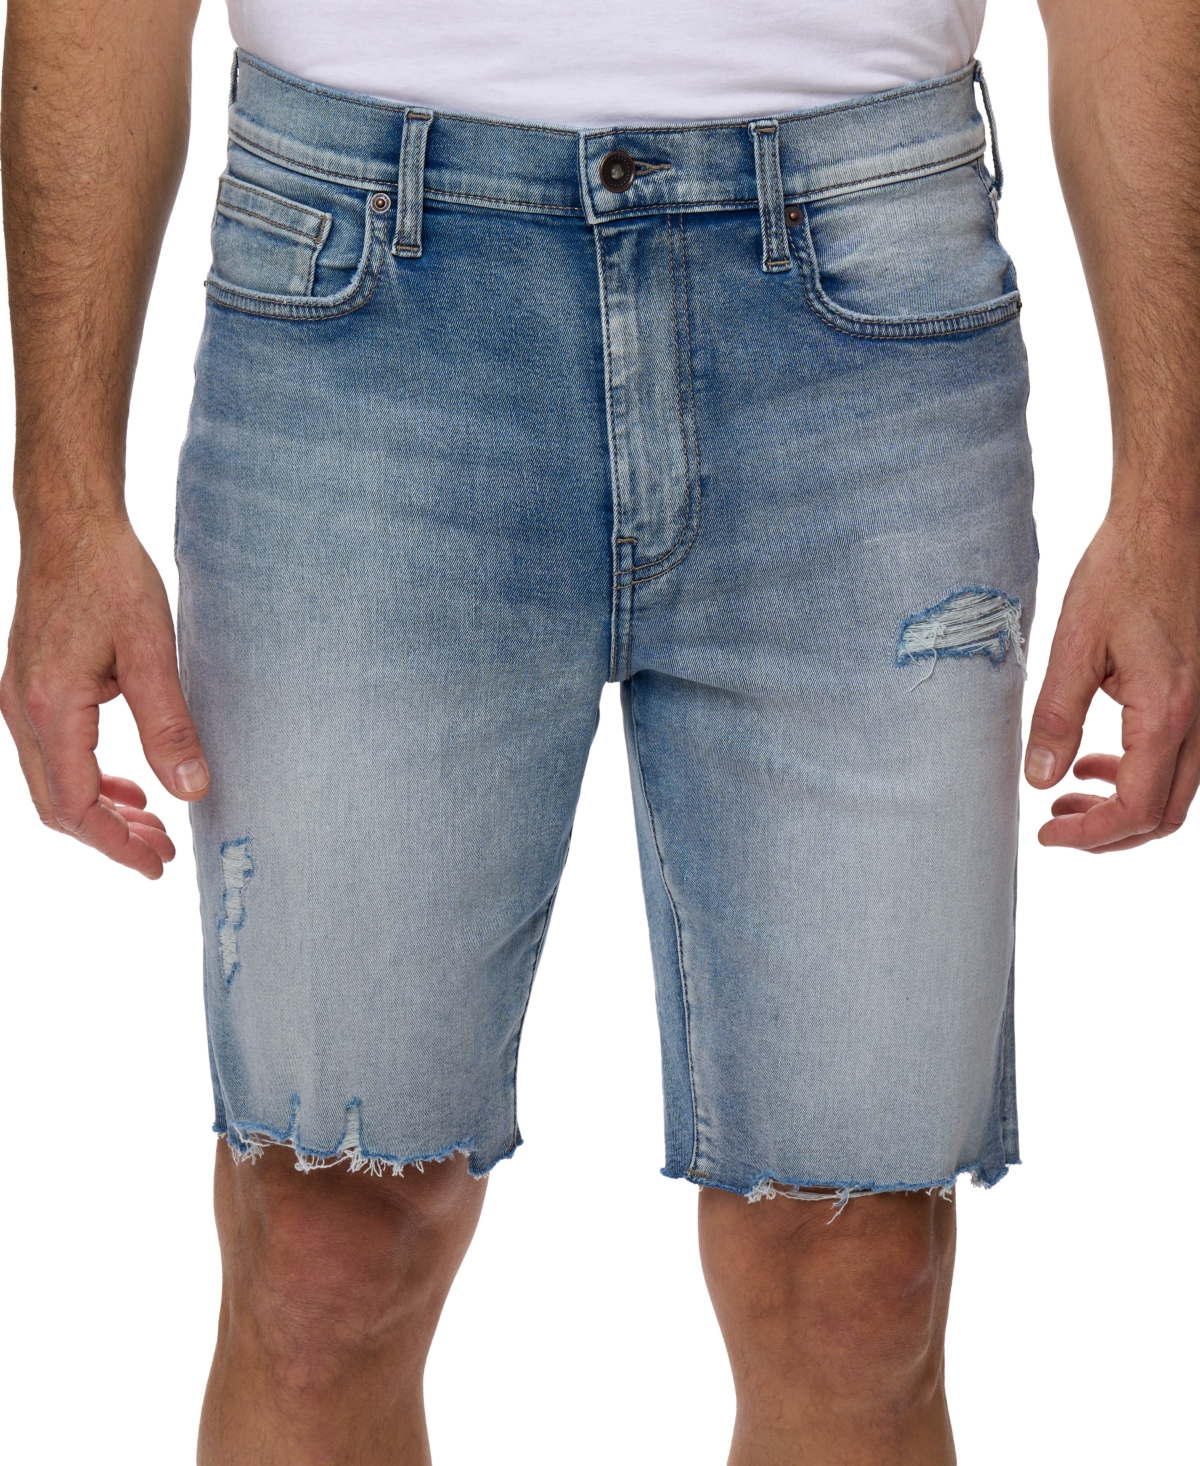 Men's Slim-Fit Stretch 9-1/2" Denim Shorts - Light Blue